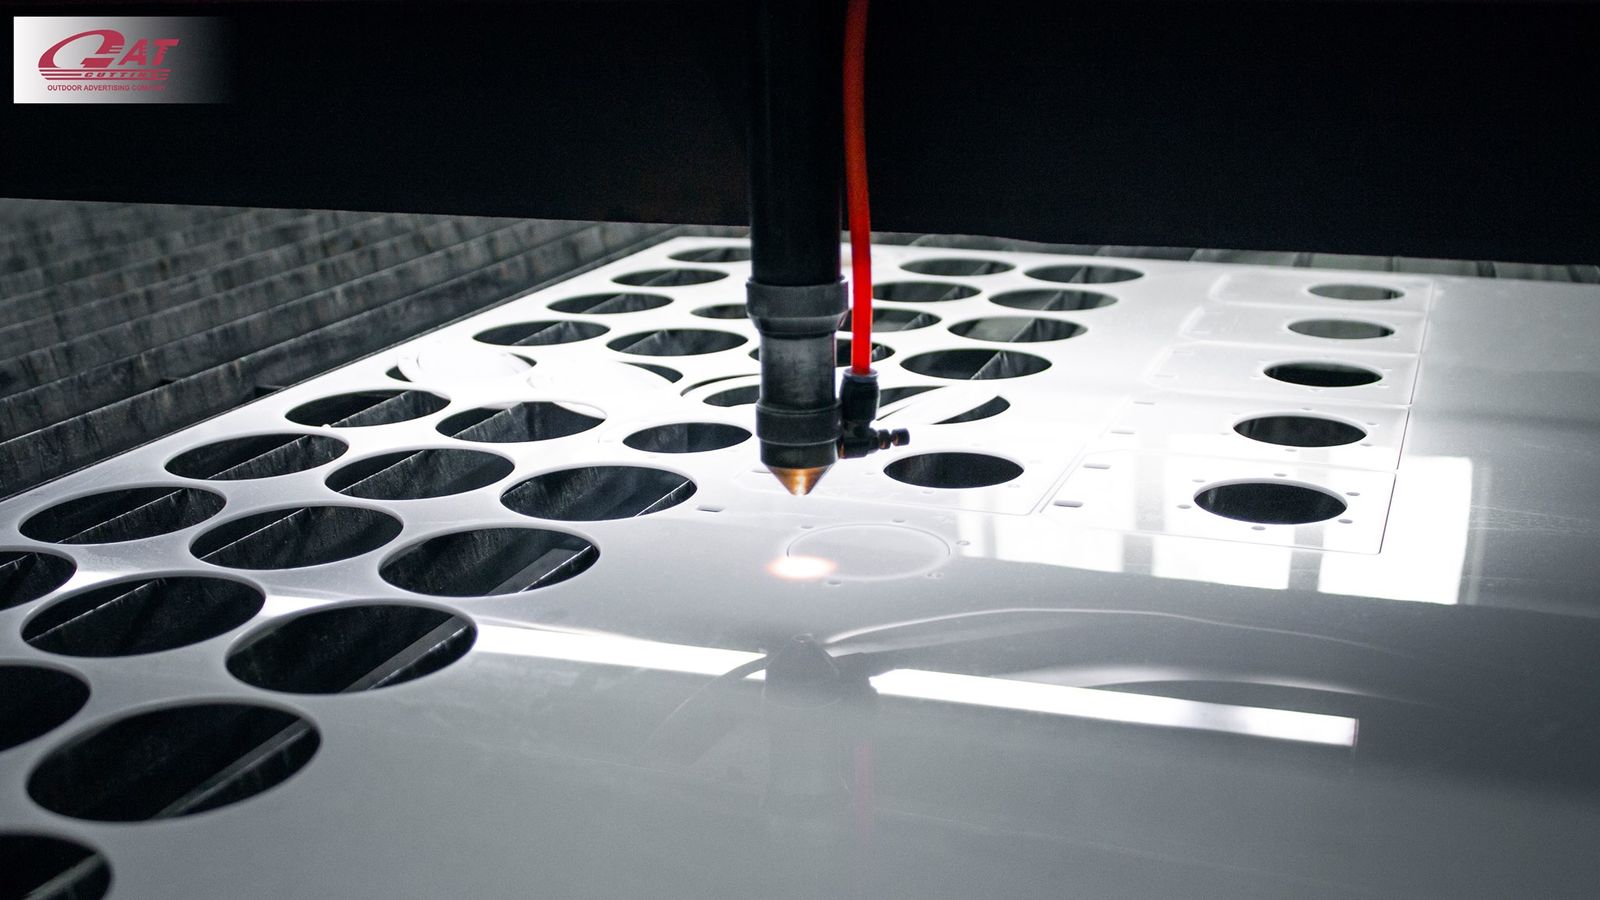 Acrylic sheet laser cutting process of circles